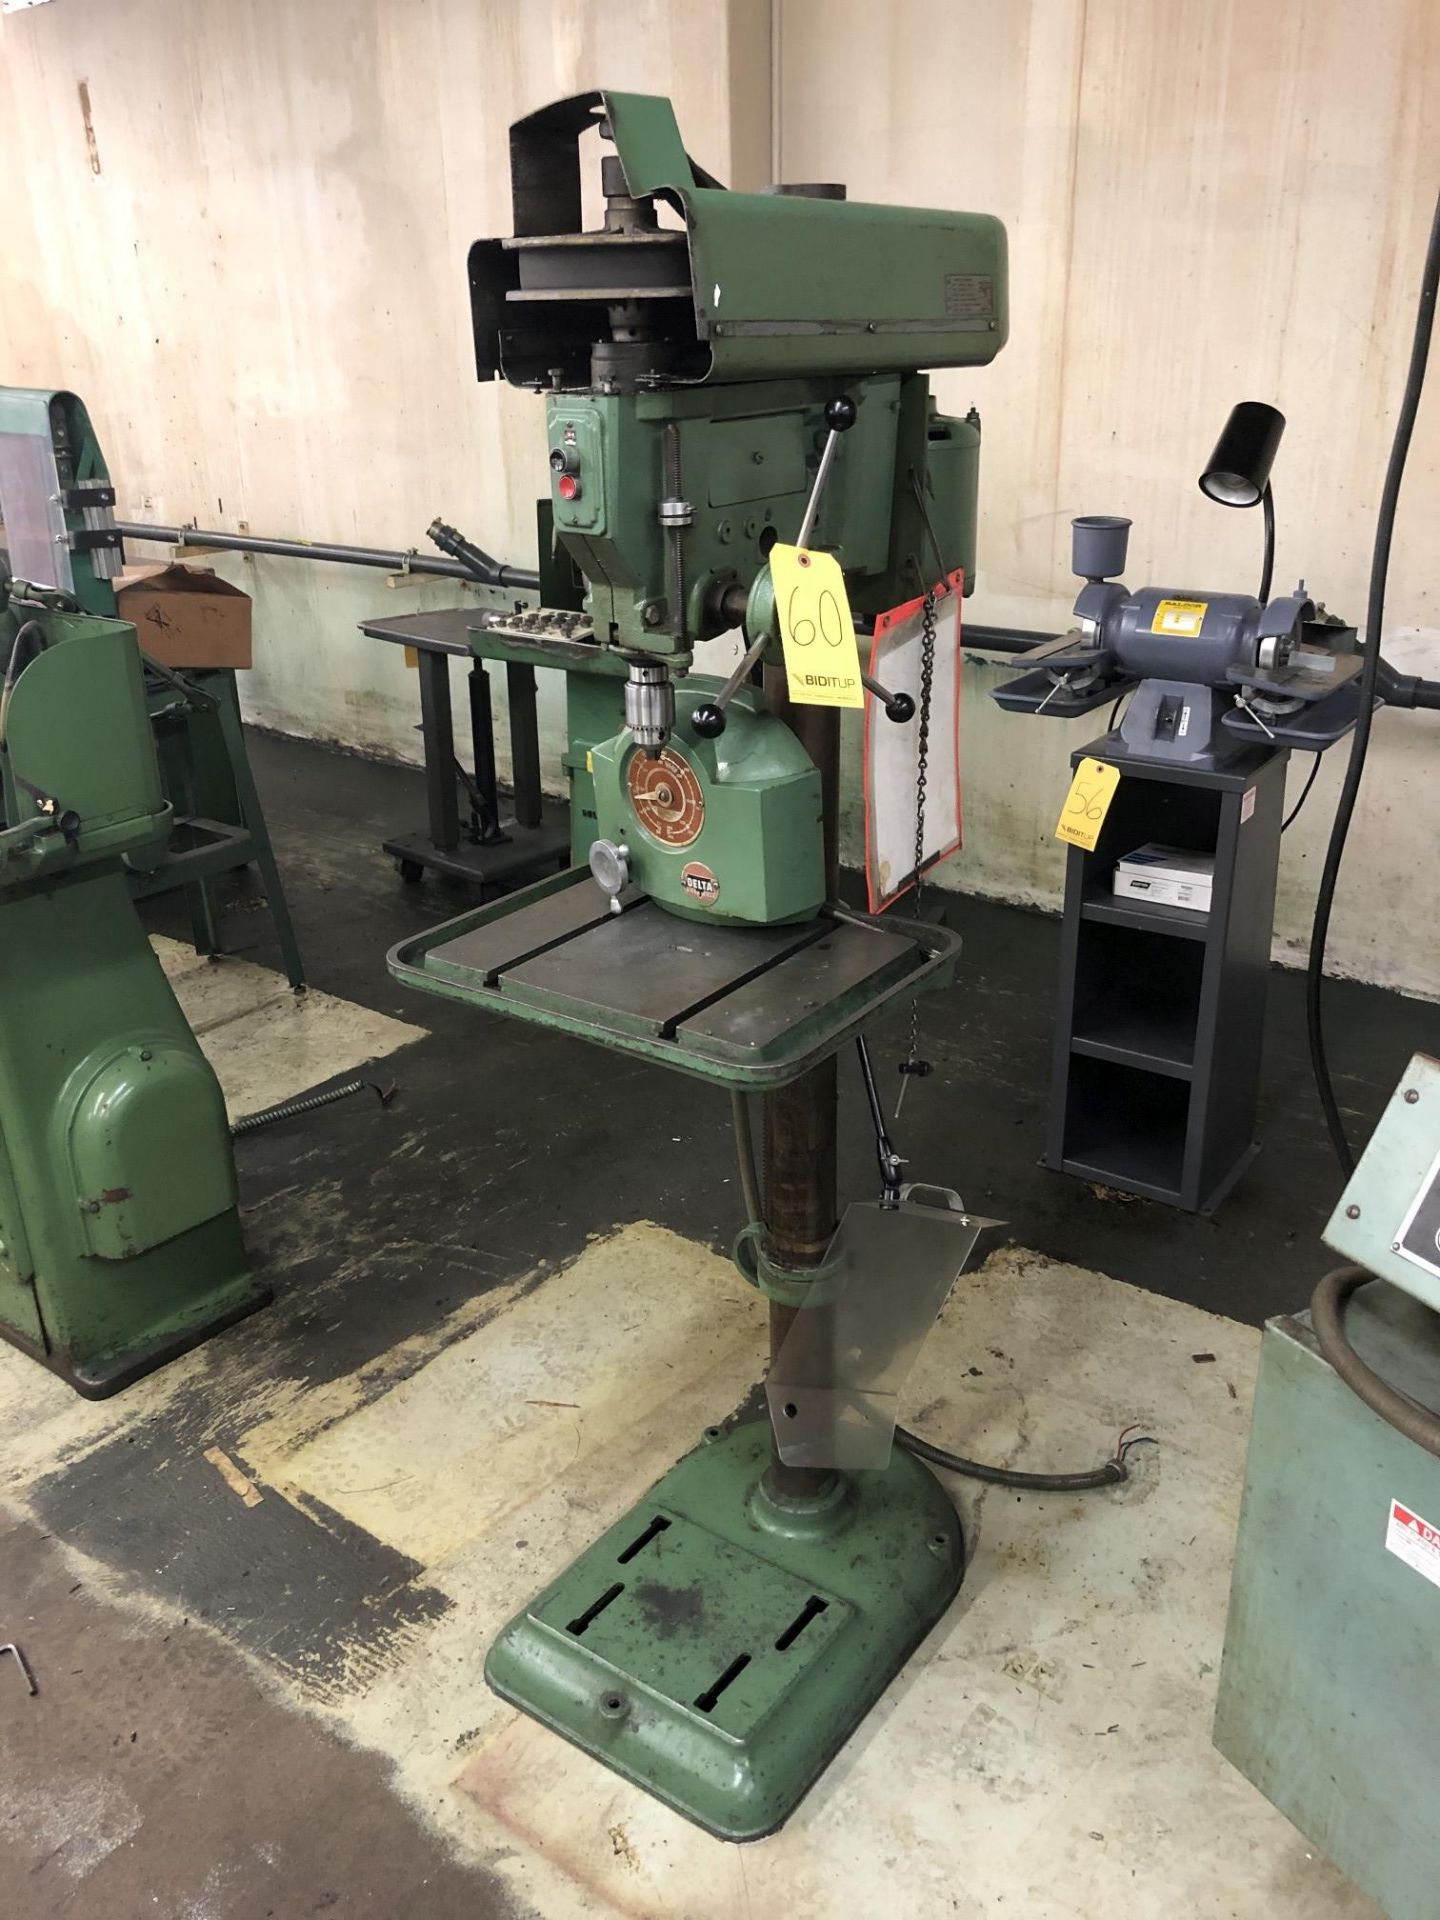 Rockwell 17" Floor Drill Press, Model 17-600